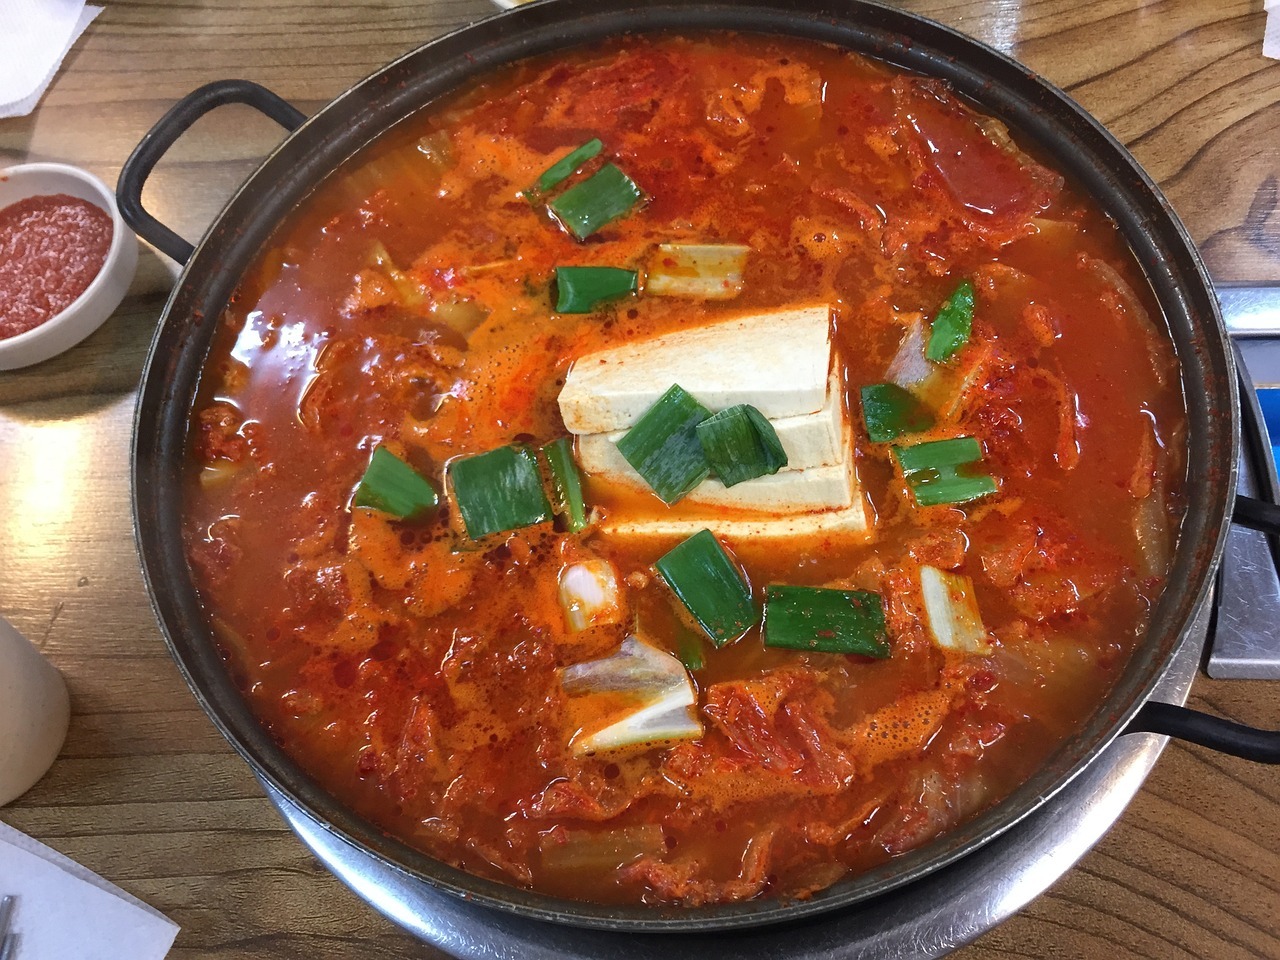 Sundubu jjigae (Soft tofu stew)